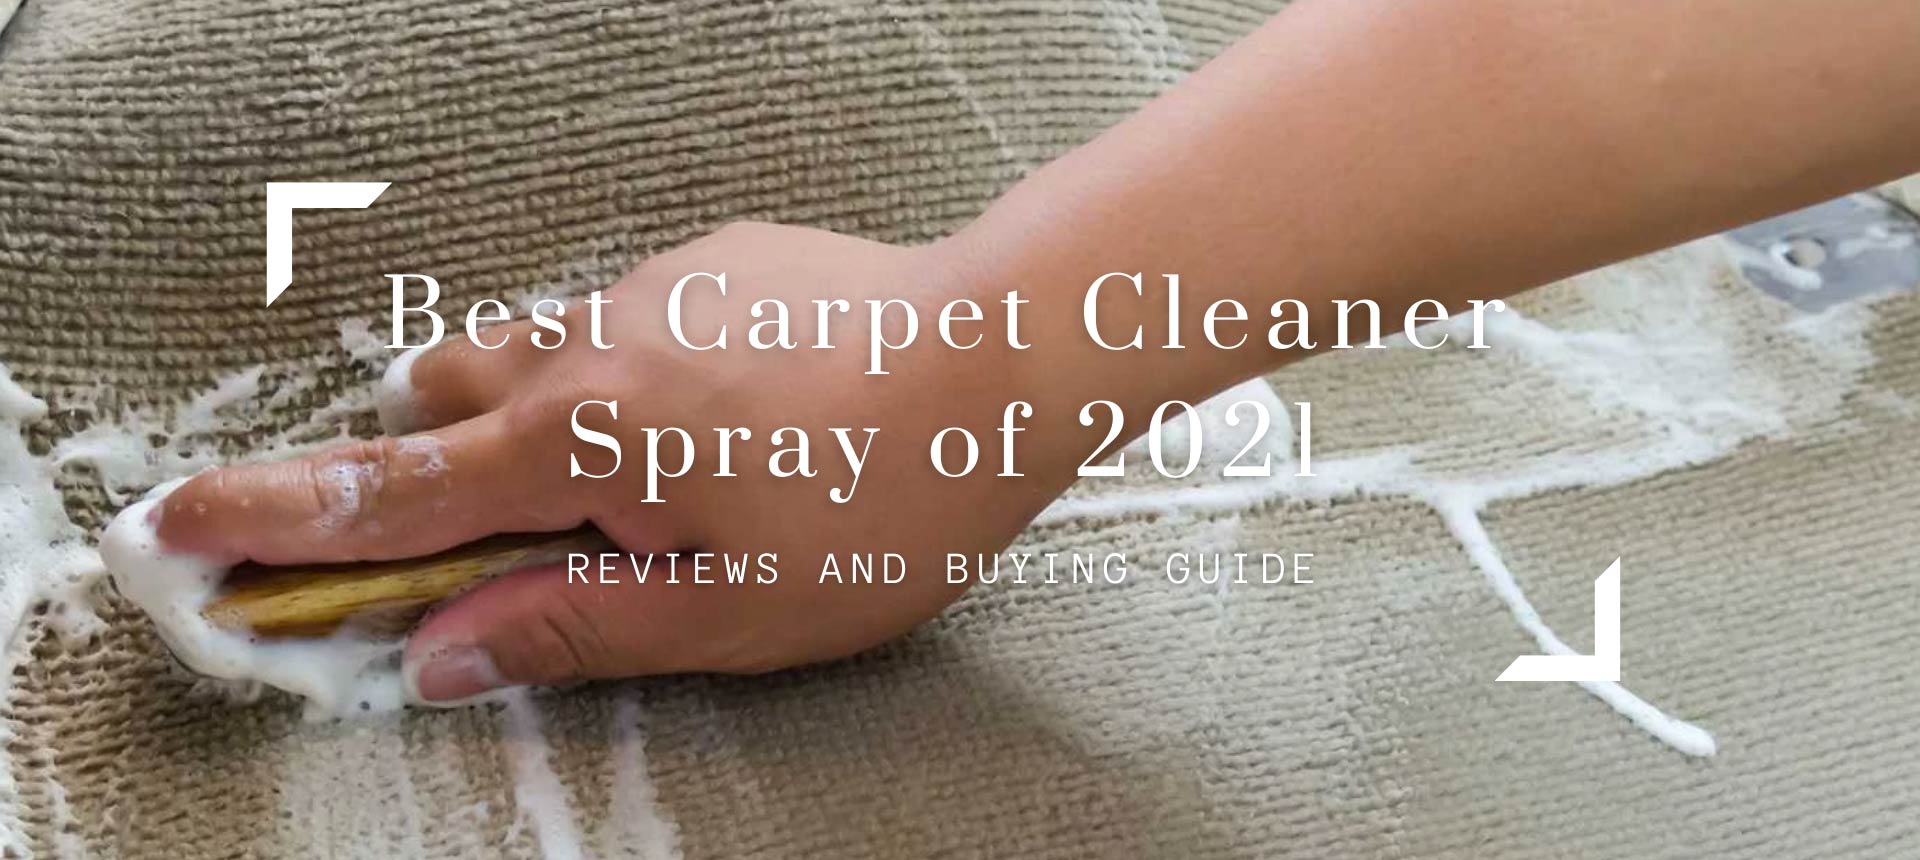 Best Carpet Cleaner Spray of 2021